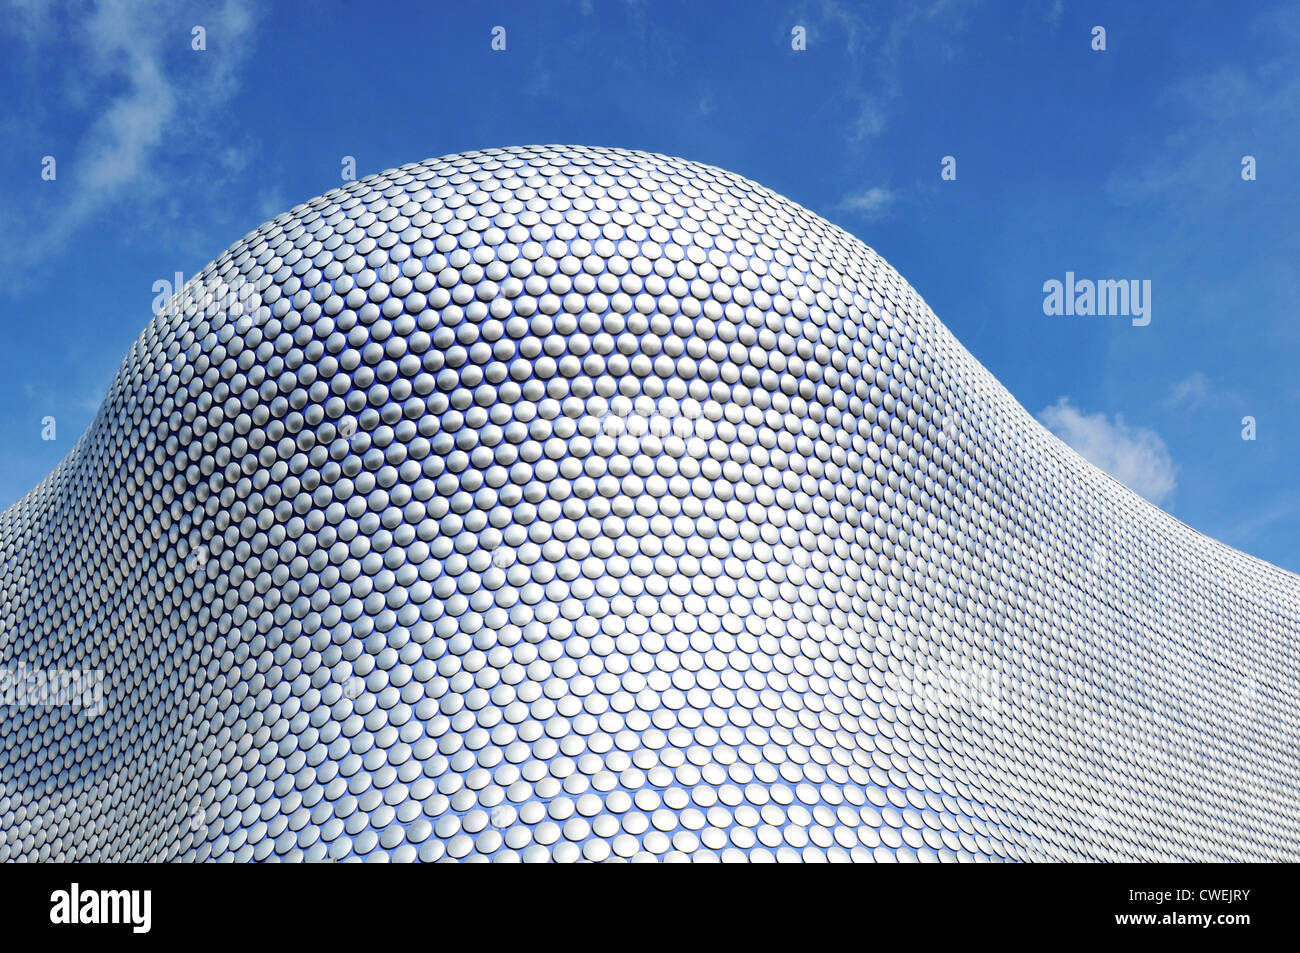 UK - 20 Sept, 2011: Architectural detail of the Selfridges department store building in Birmingham against blue sky Stock Photo